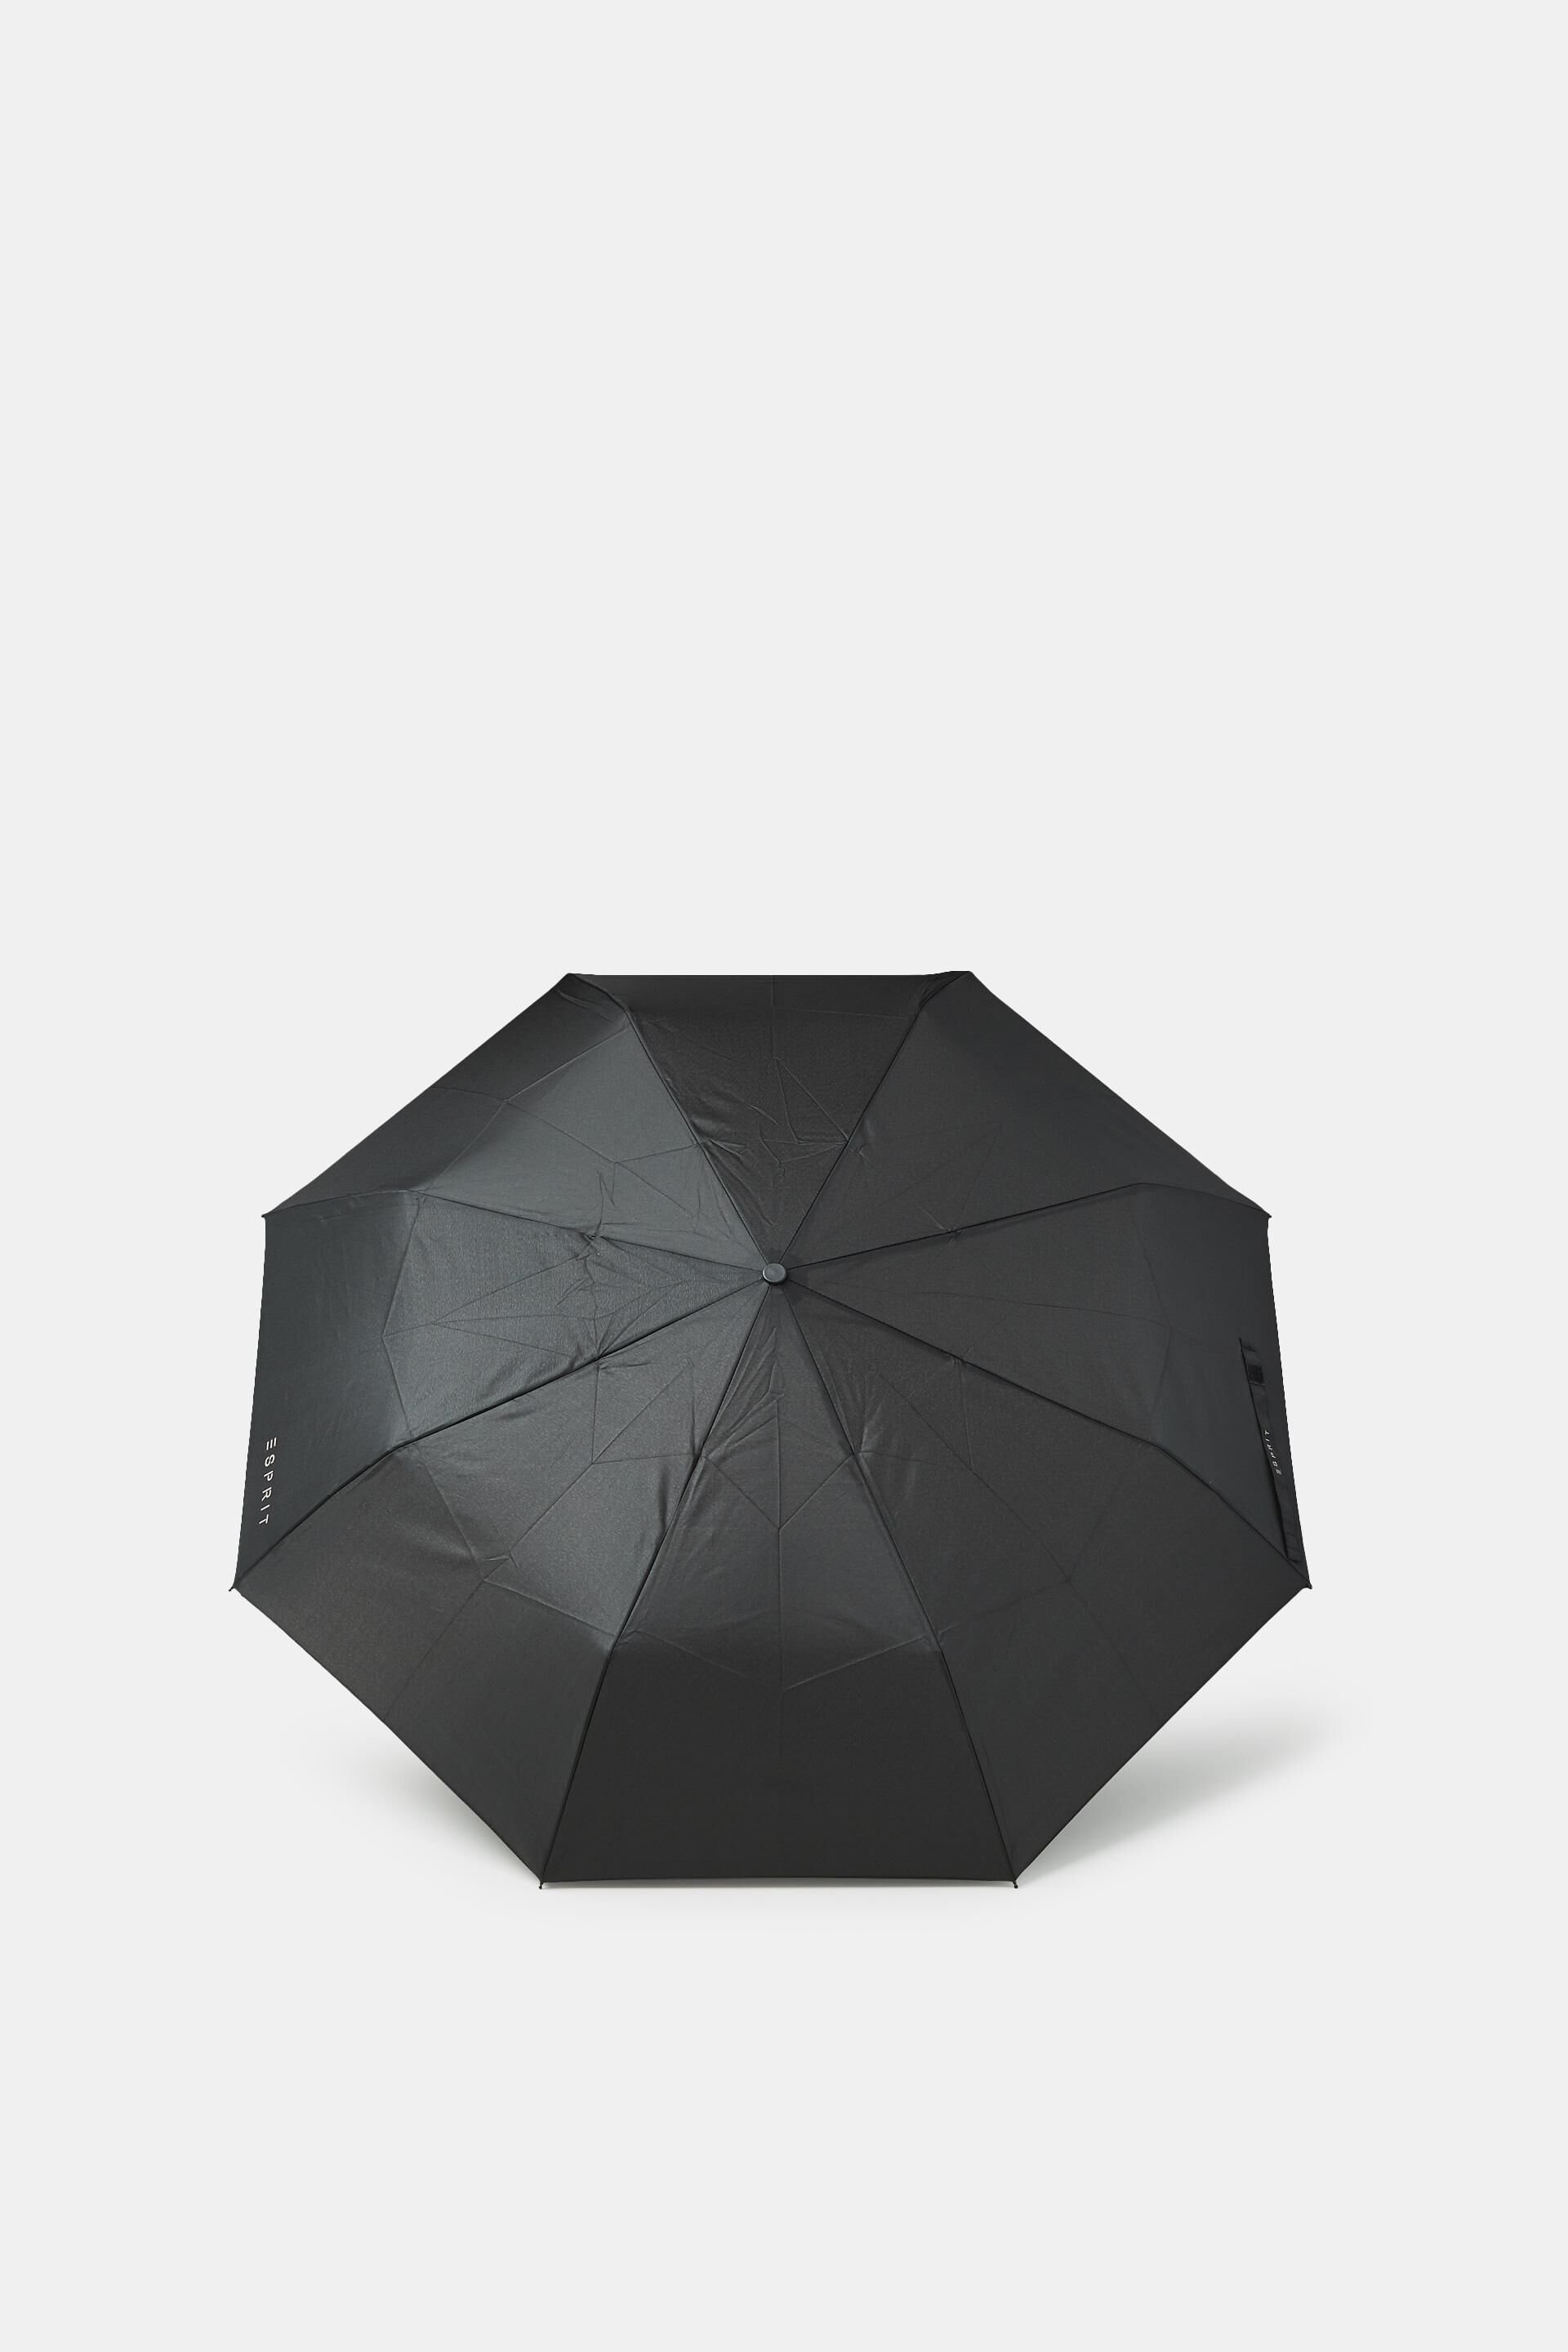 Esprit handle with umbrella Mini pocket a round